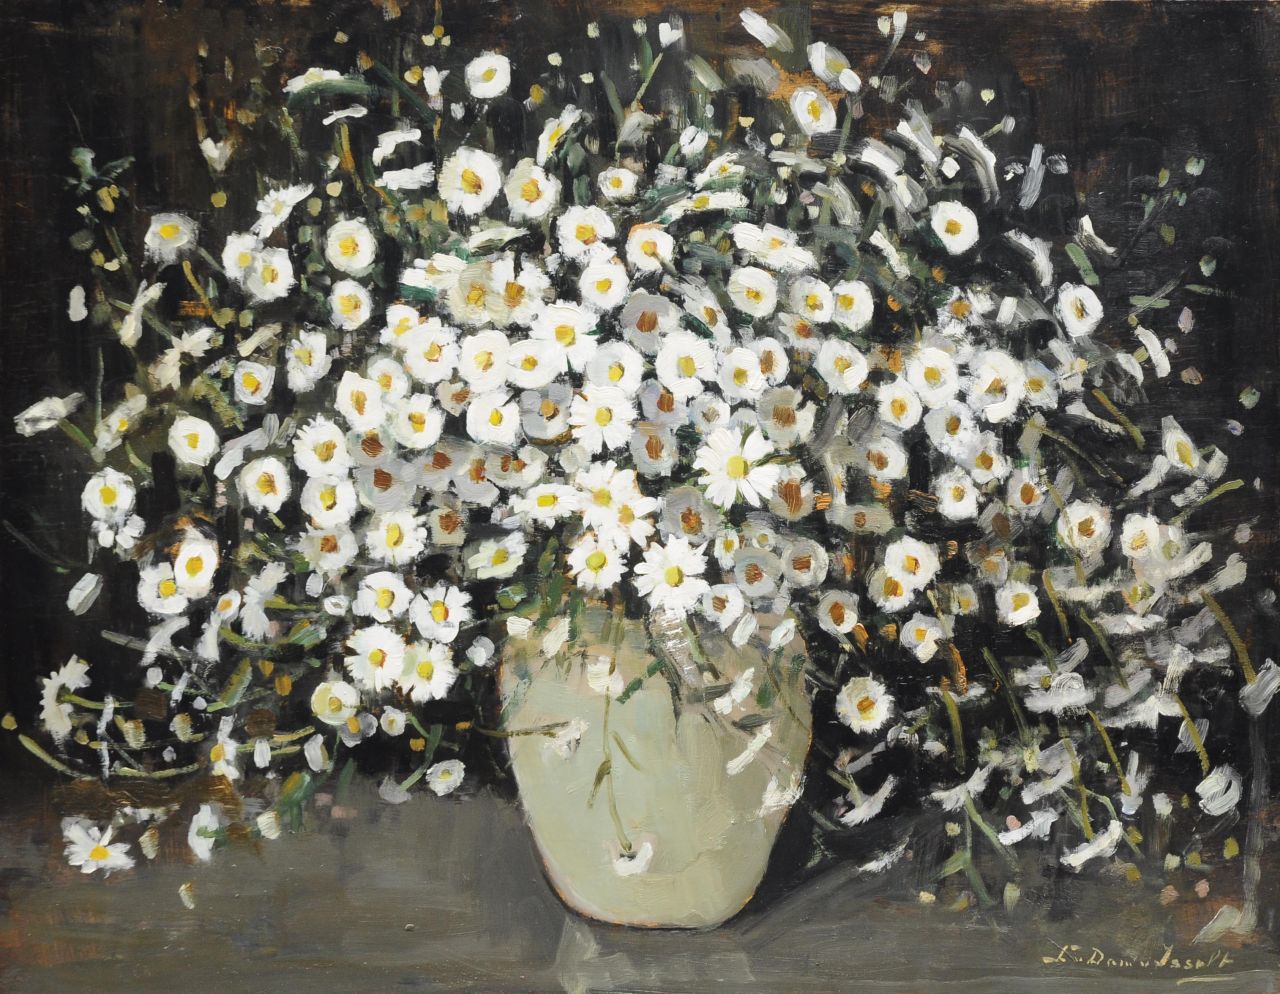 Dam van Isselt L. van | Lucie van Dam van Isselt, Daisies in a white vase, oil on panel 56.1 x 71.1 cm, signed l.r.